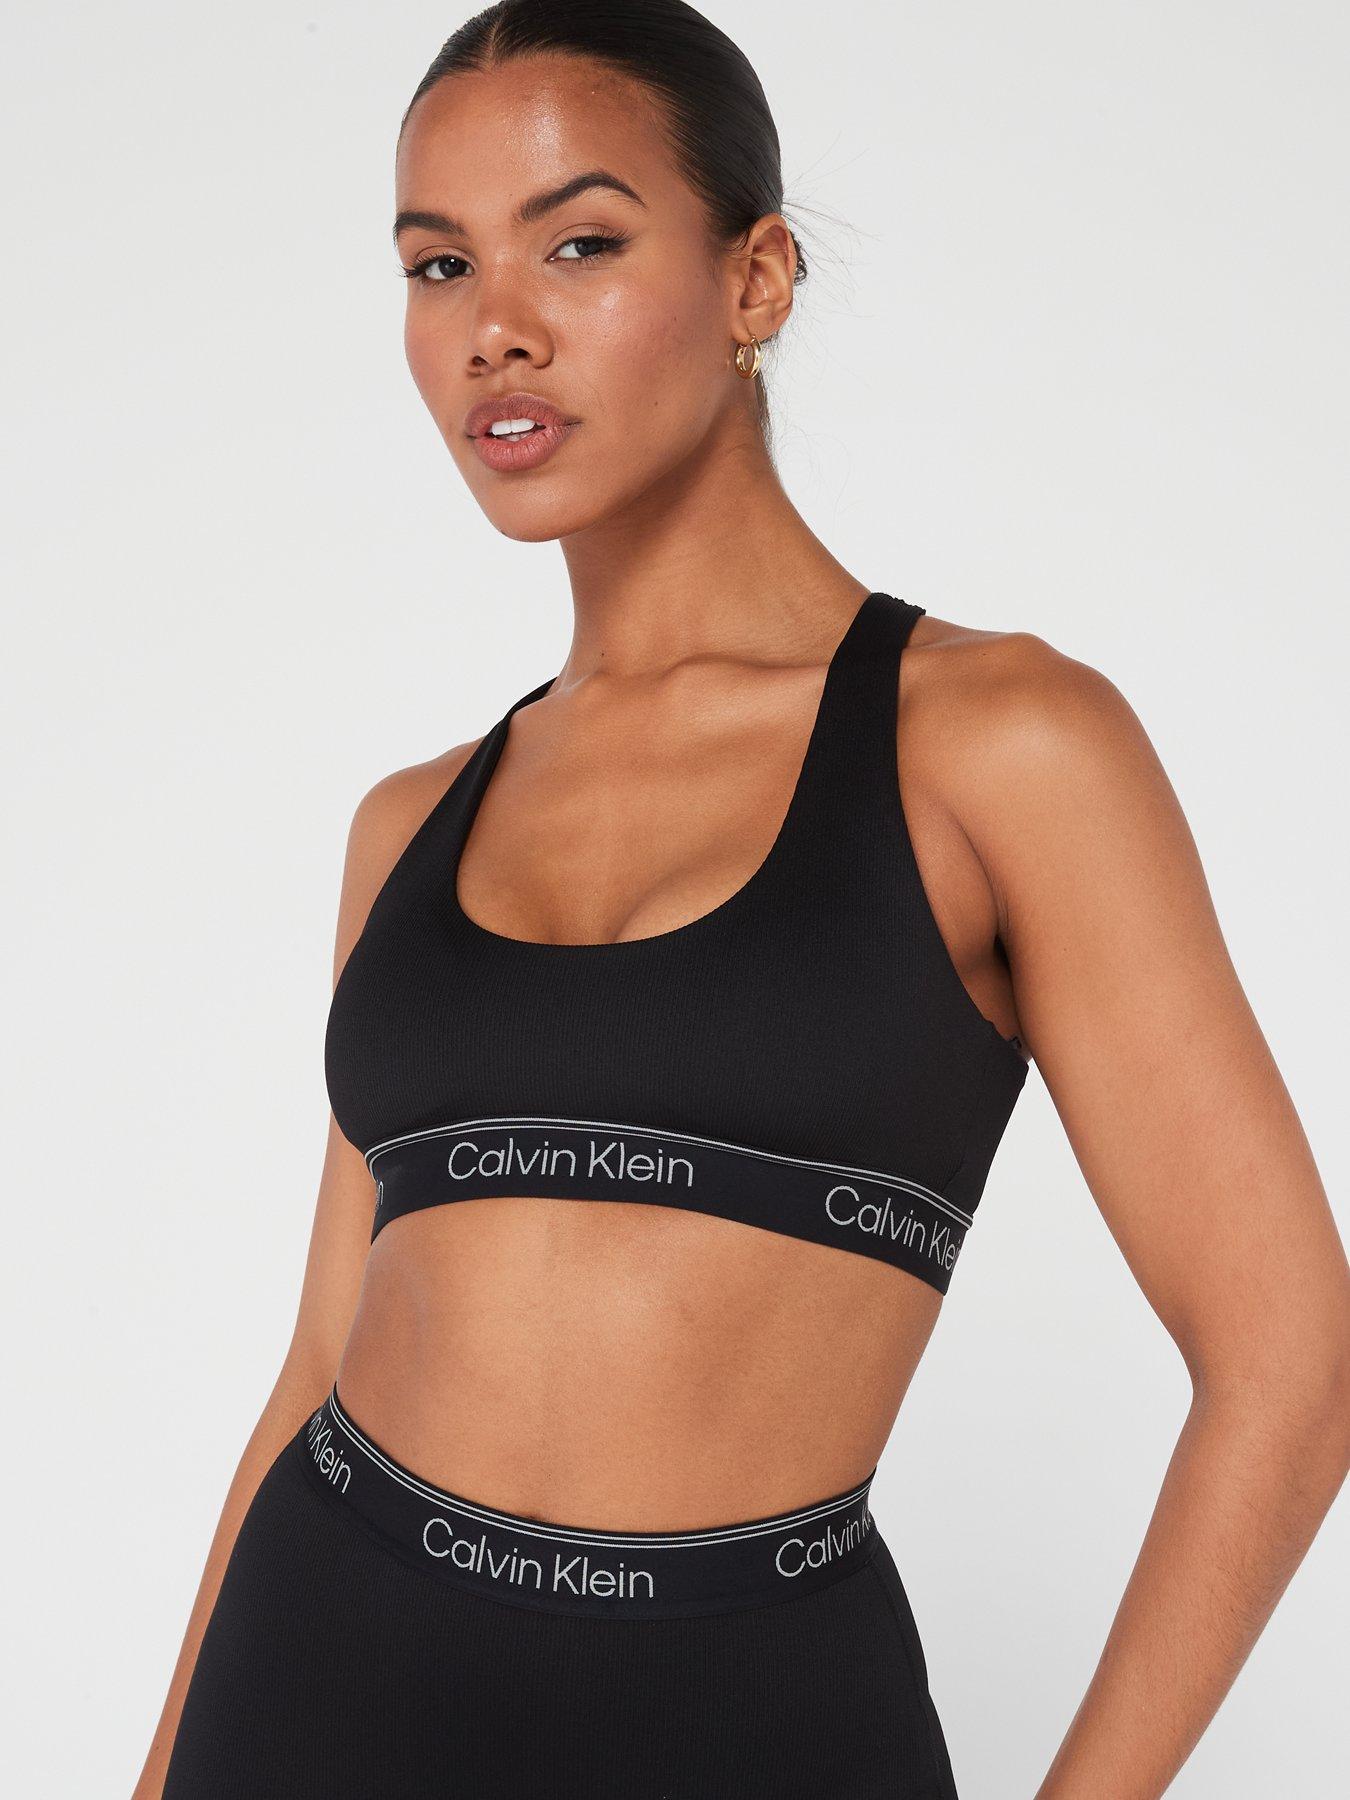 Buy Calvin Klein Performance Sports Bras & Crops